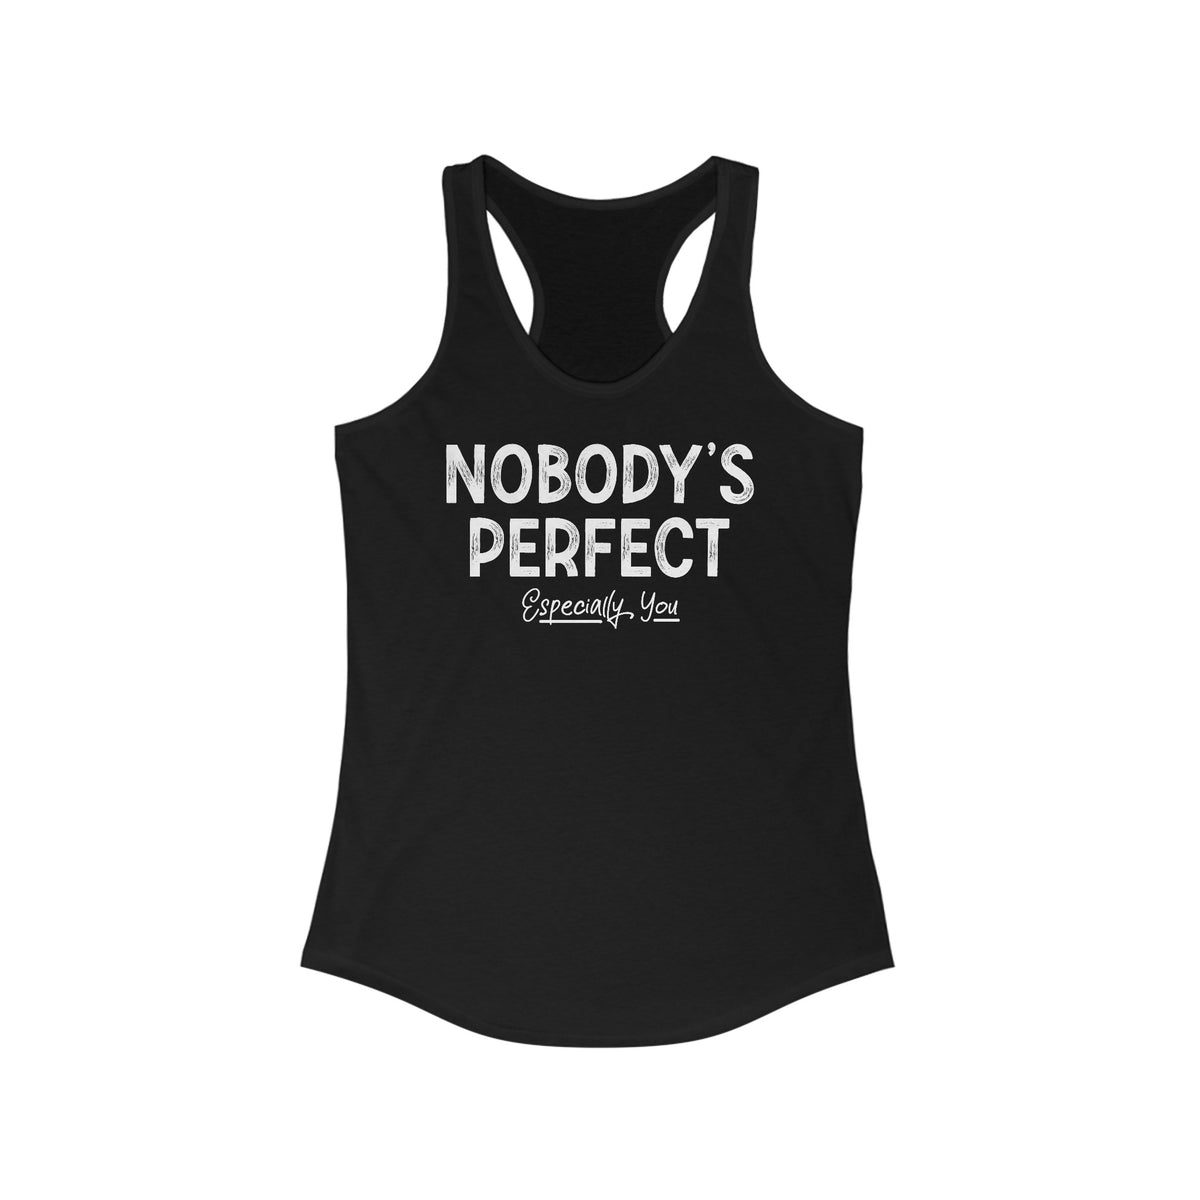 Nobody's Perfect. Especially You. - Women’s Racerback Tank